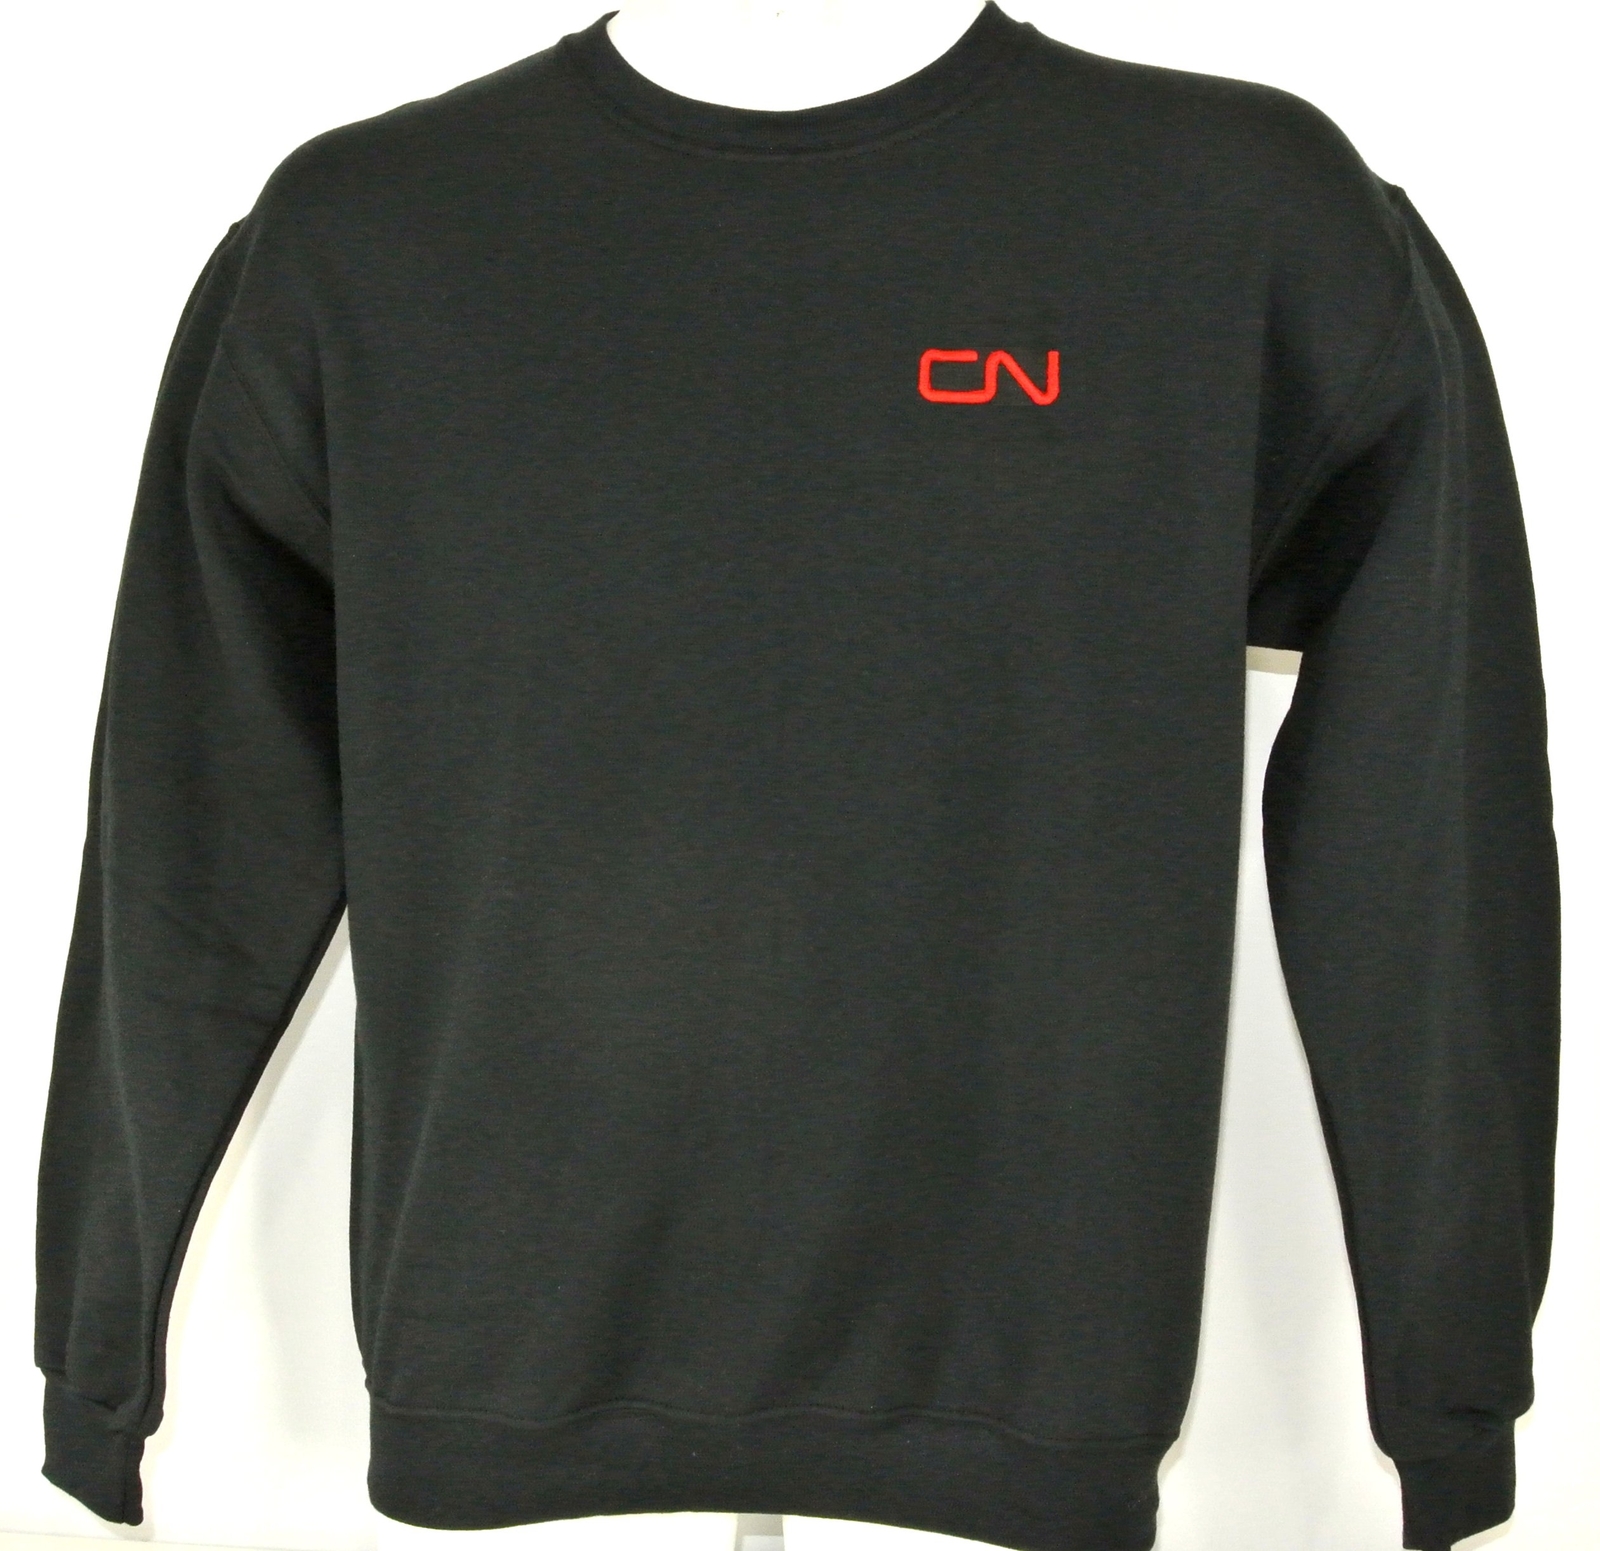 CN Rail Canadian National Railway Employee Uniform Sweatshirt Black NEW